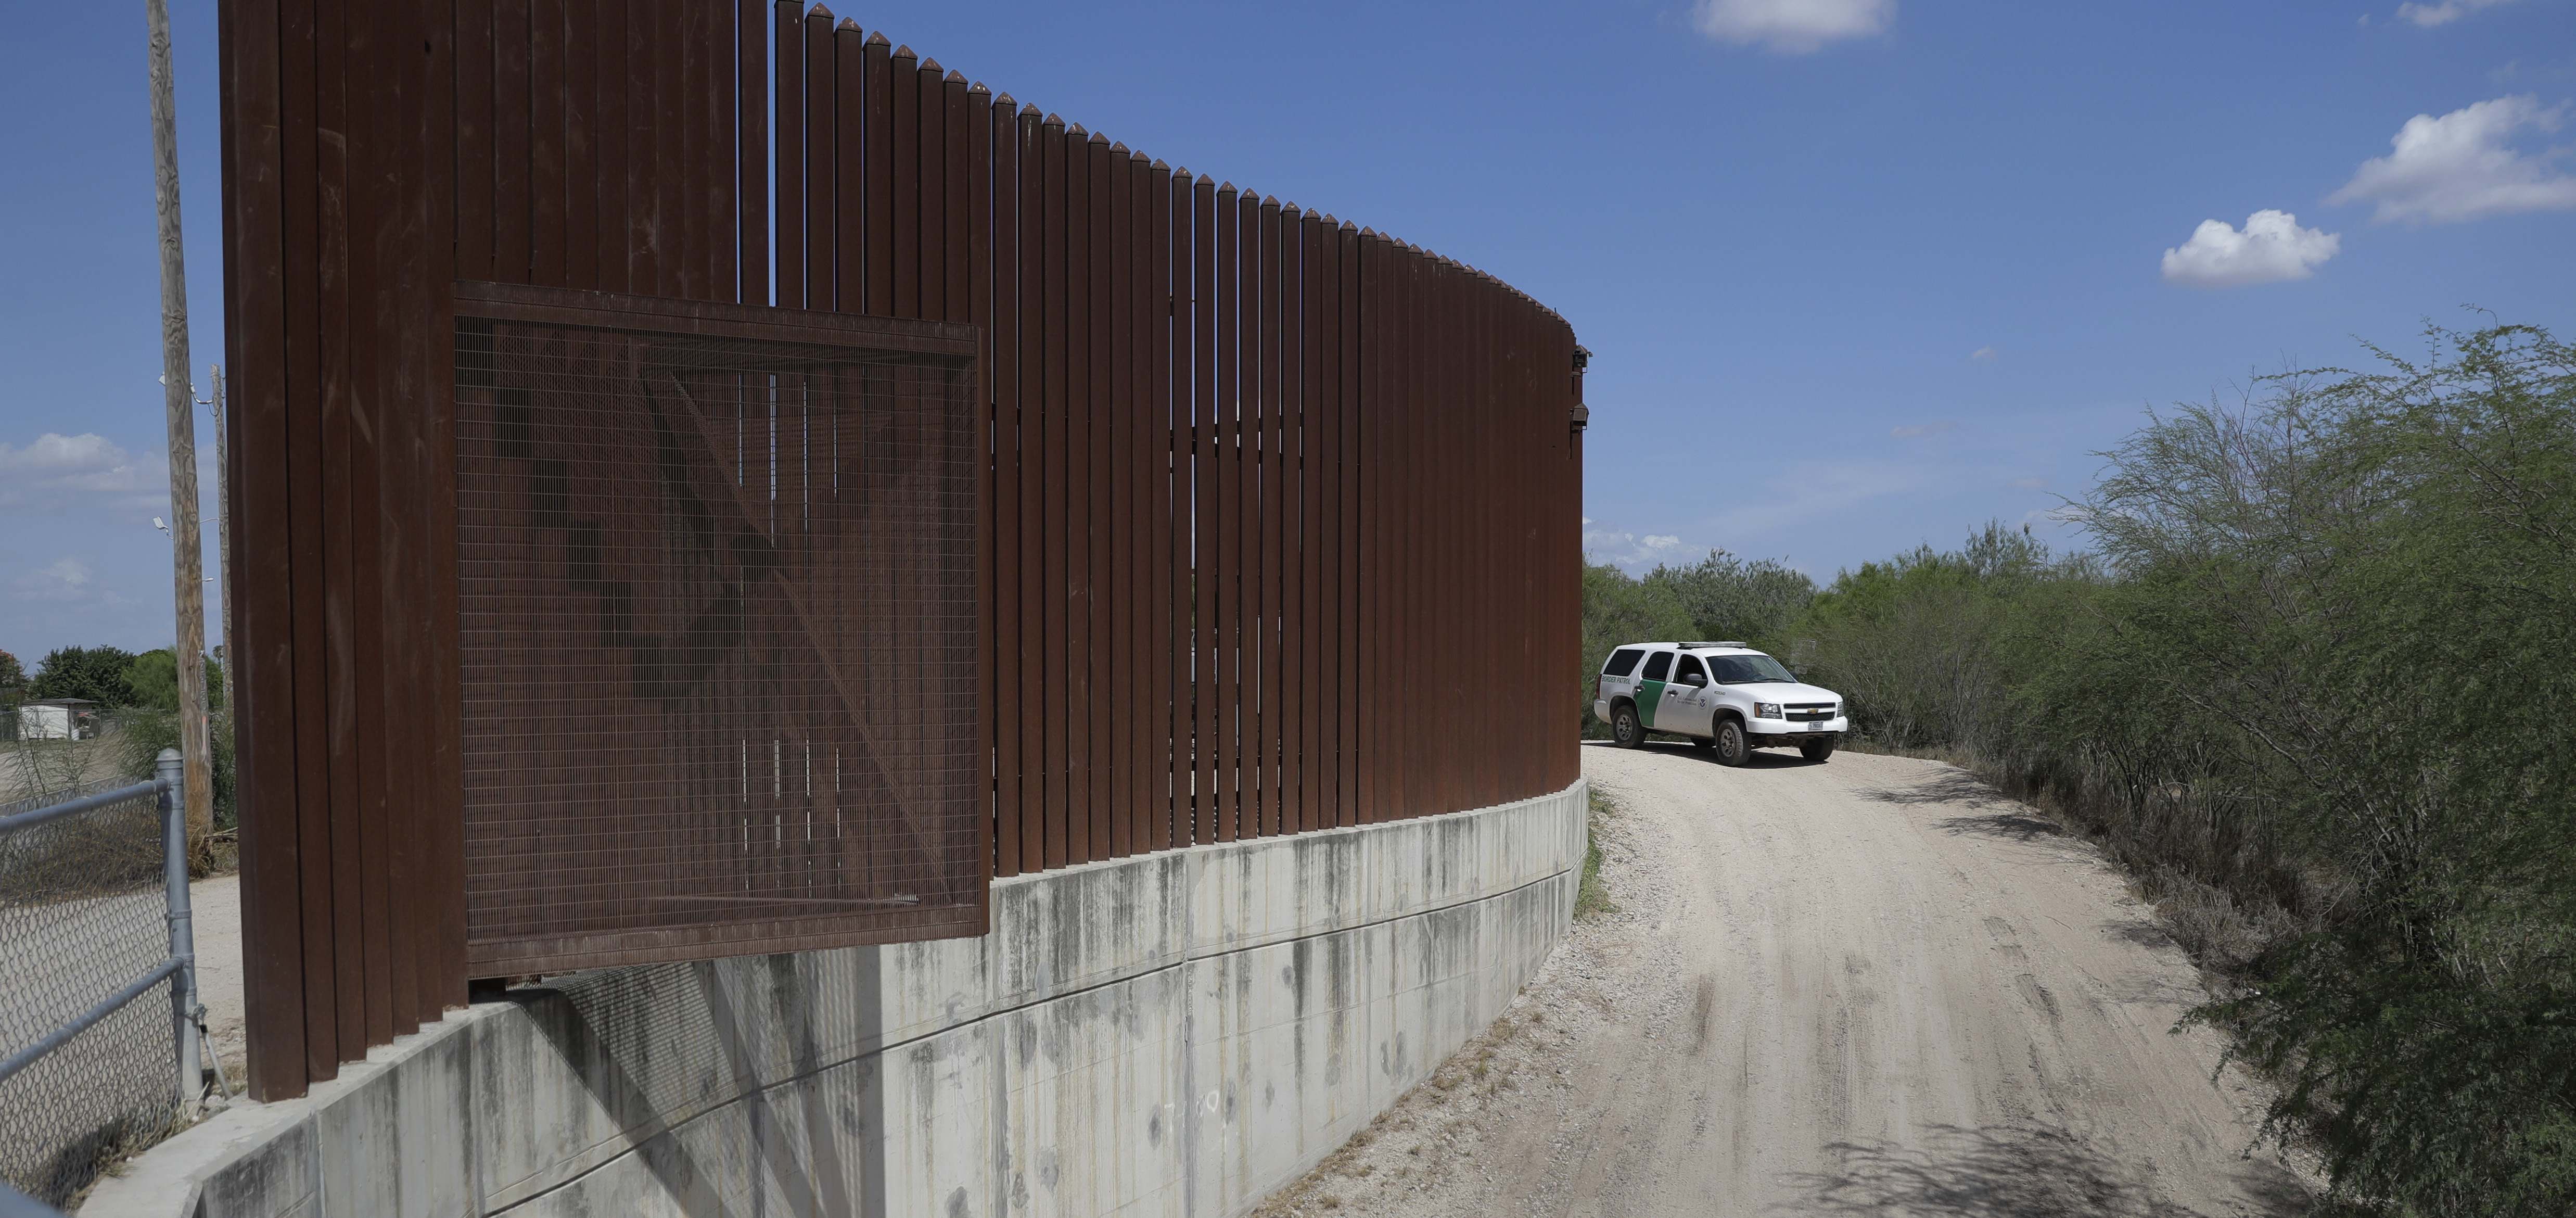 California Files Lawsuit Against Trump Over Border Wall